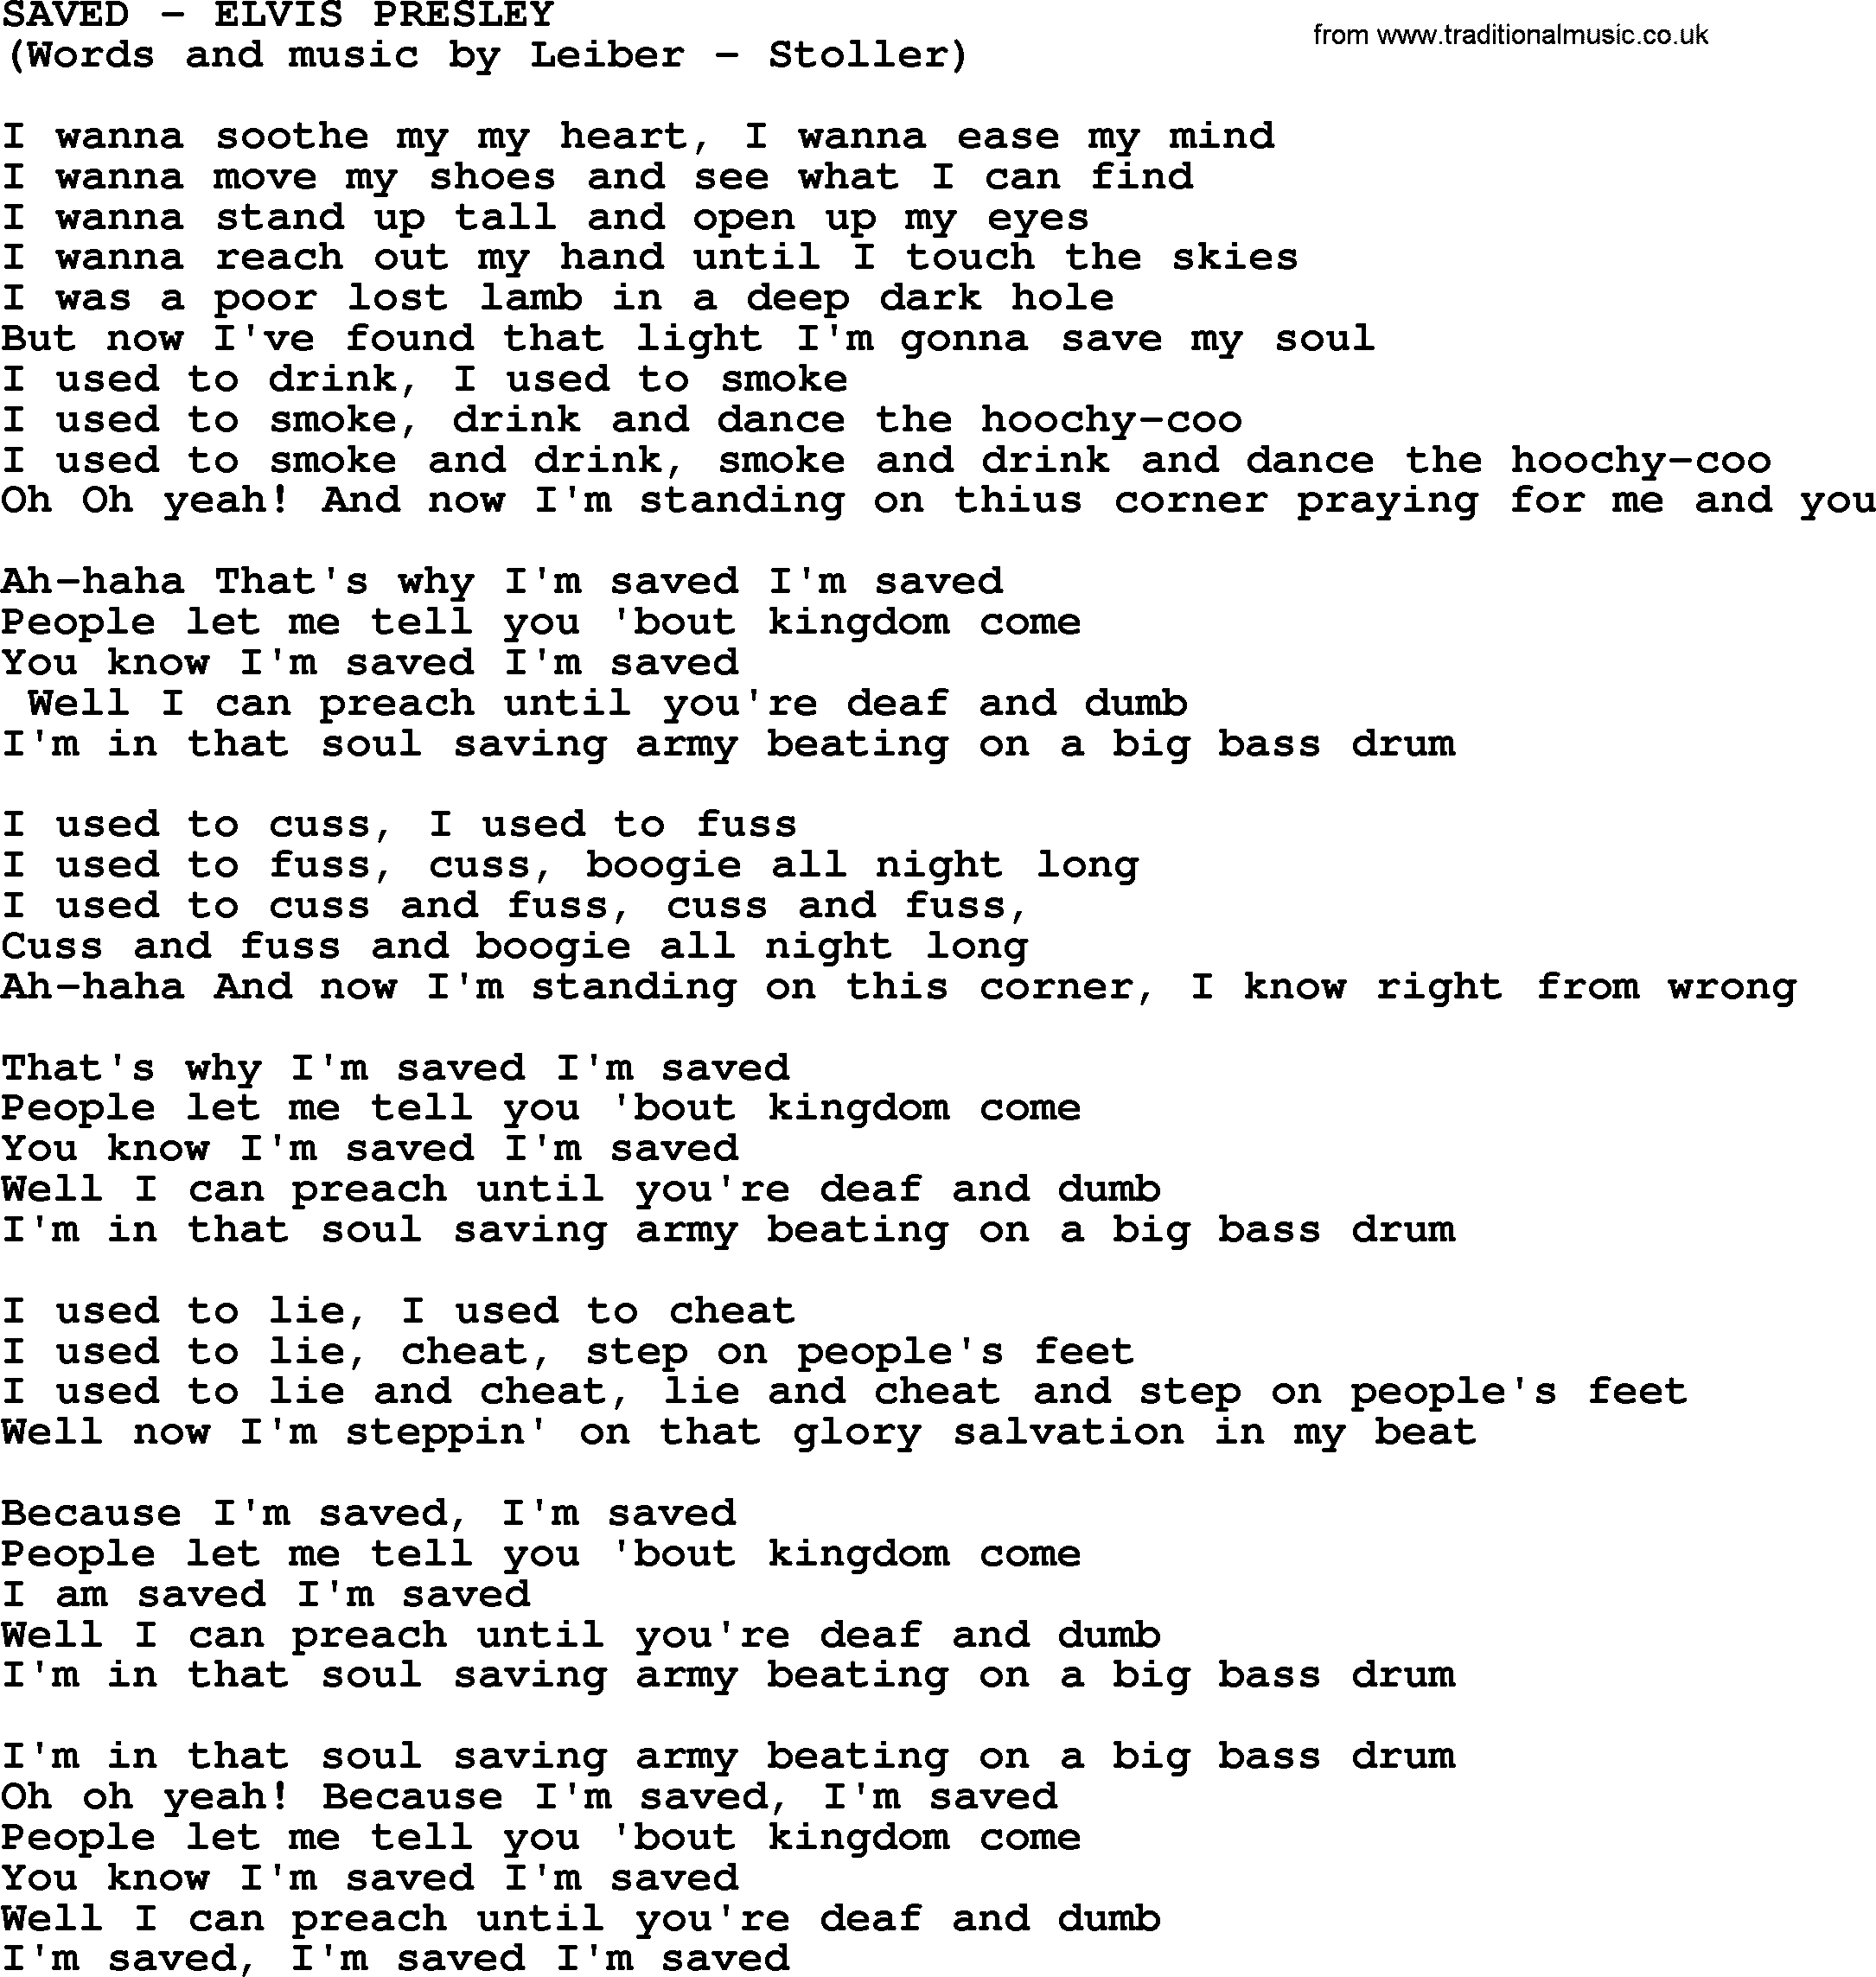 Elvis Presley song: Saved lyrics